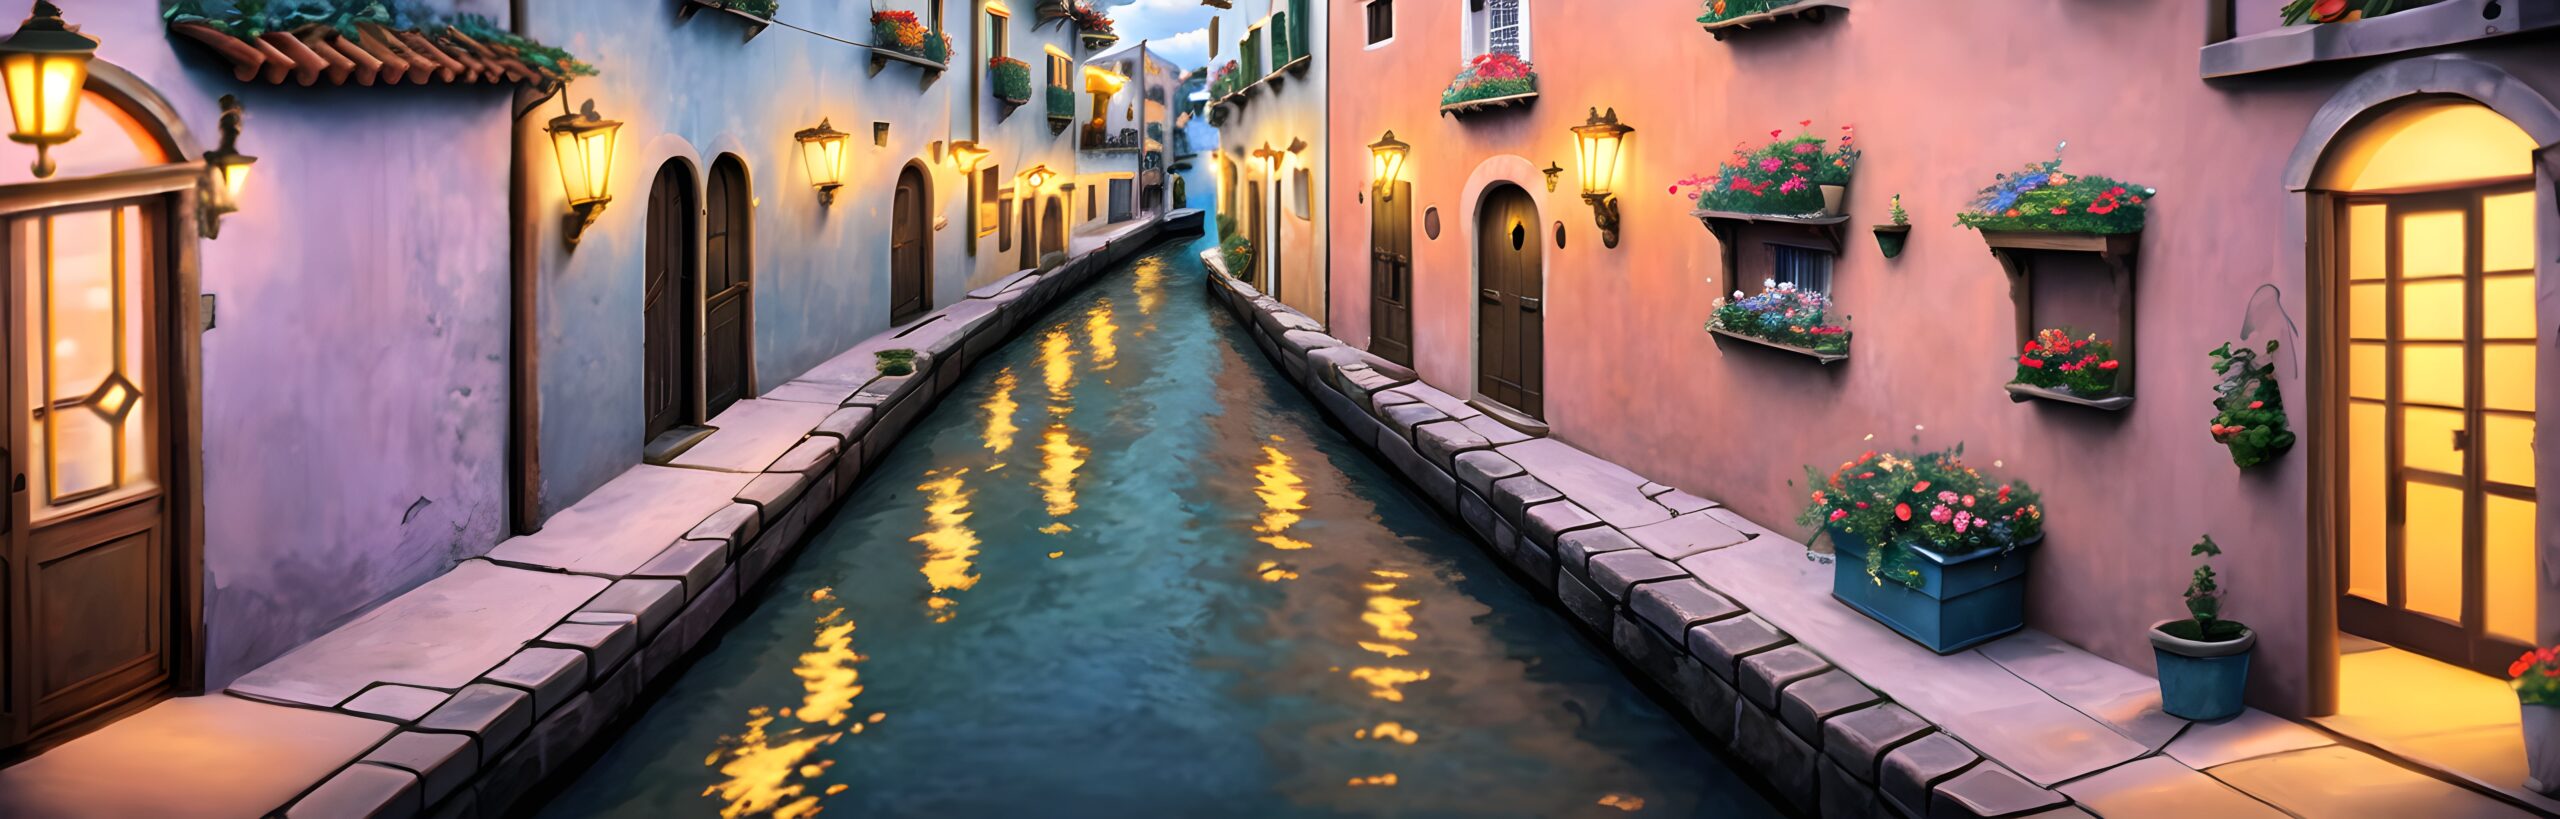 Water Street of Venice